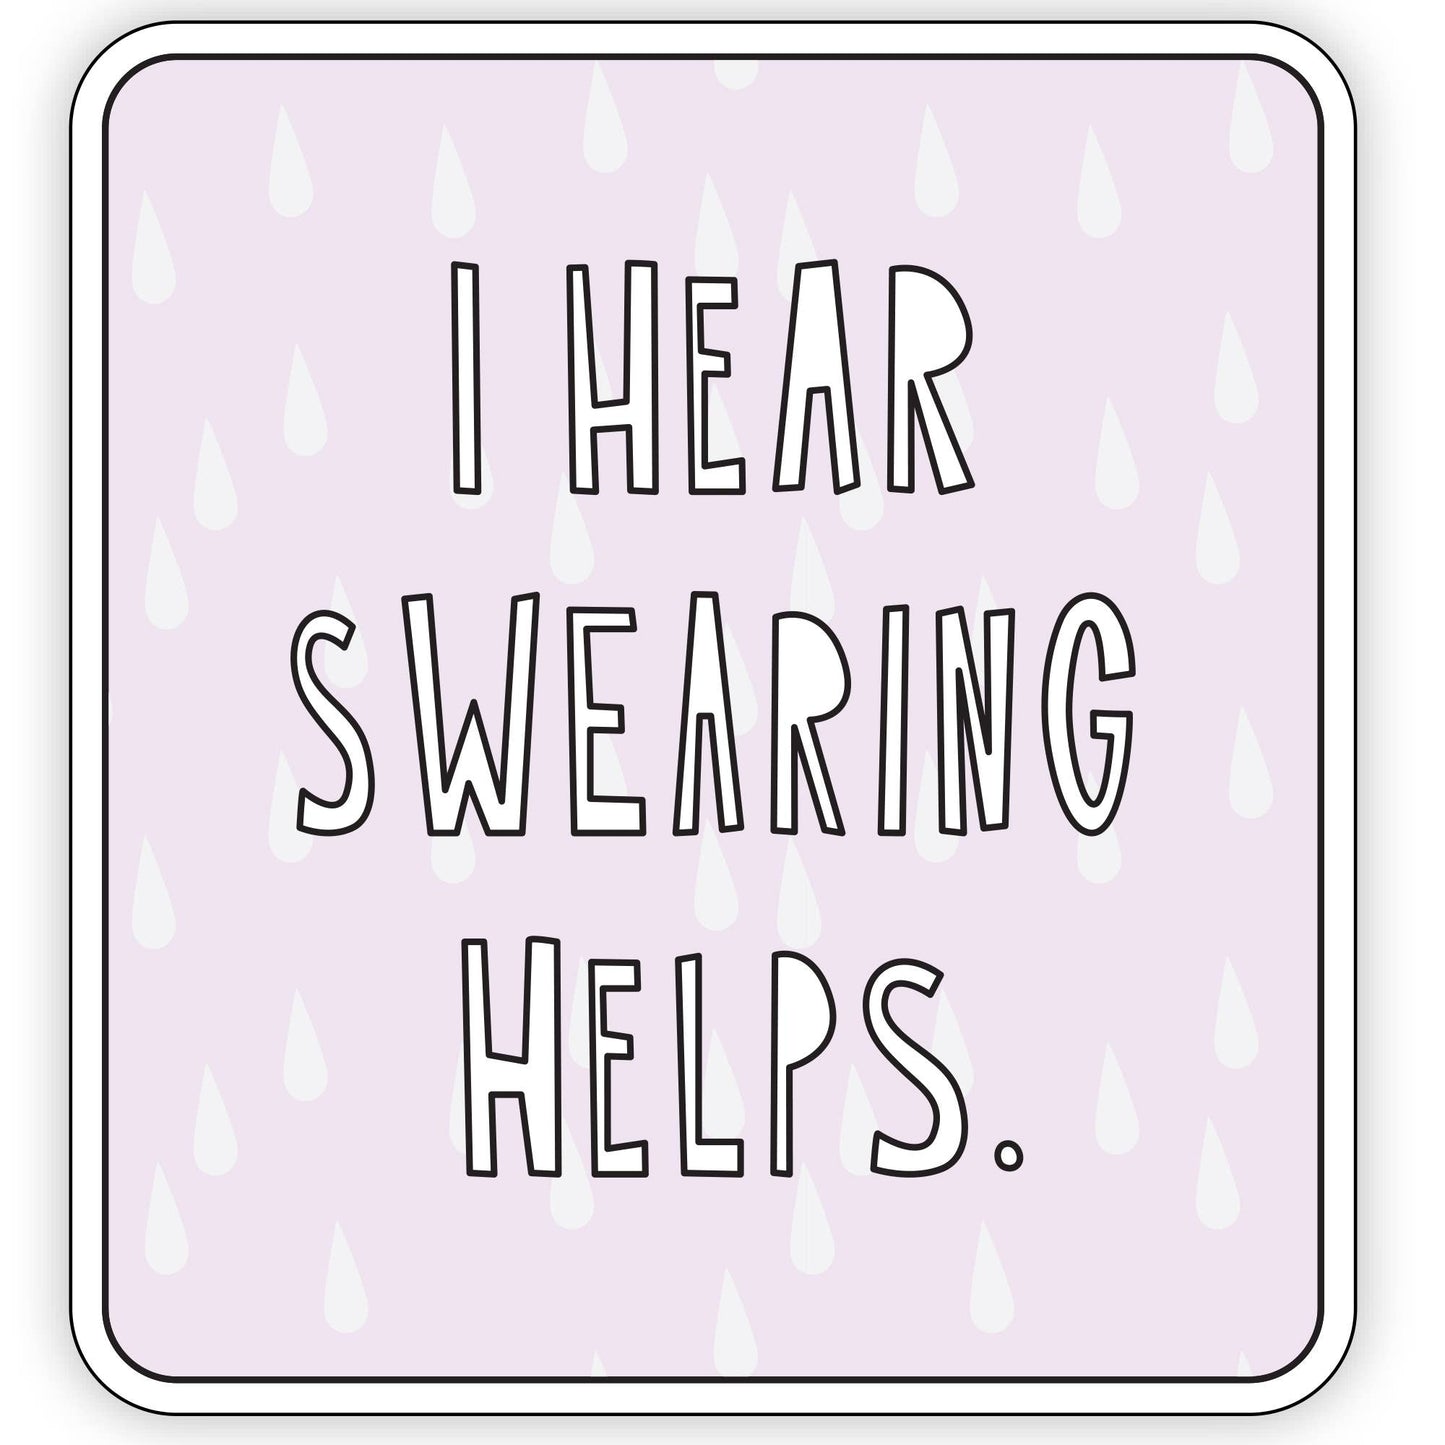 I Hear Swearing Helps - 3" vinyl sticker